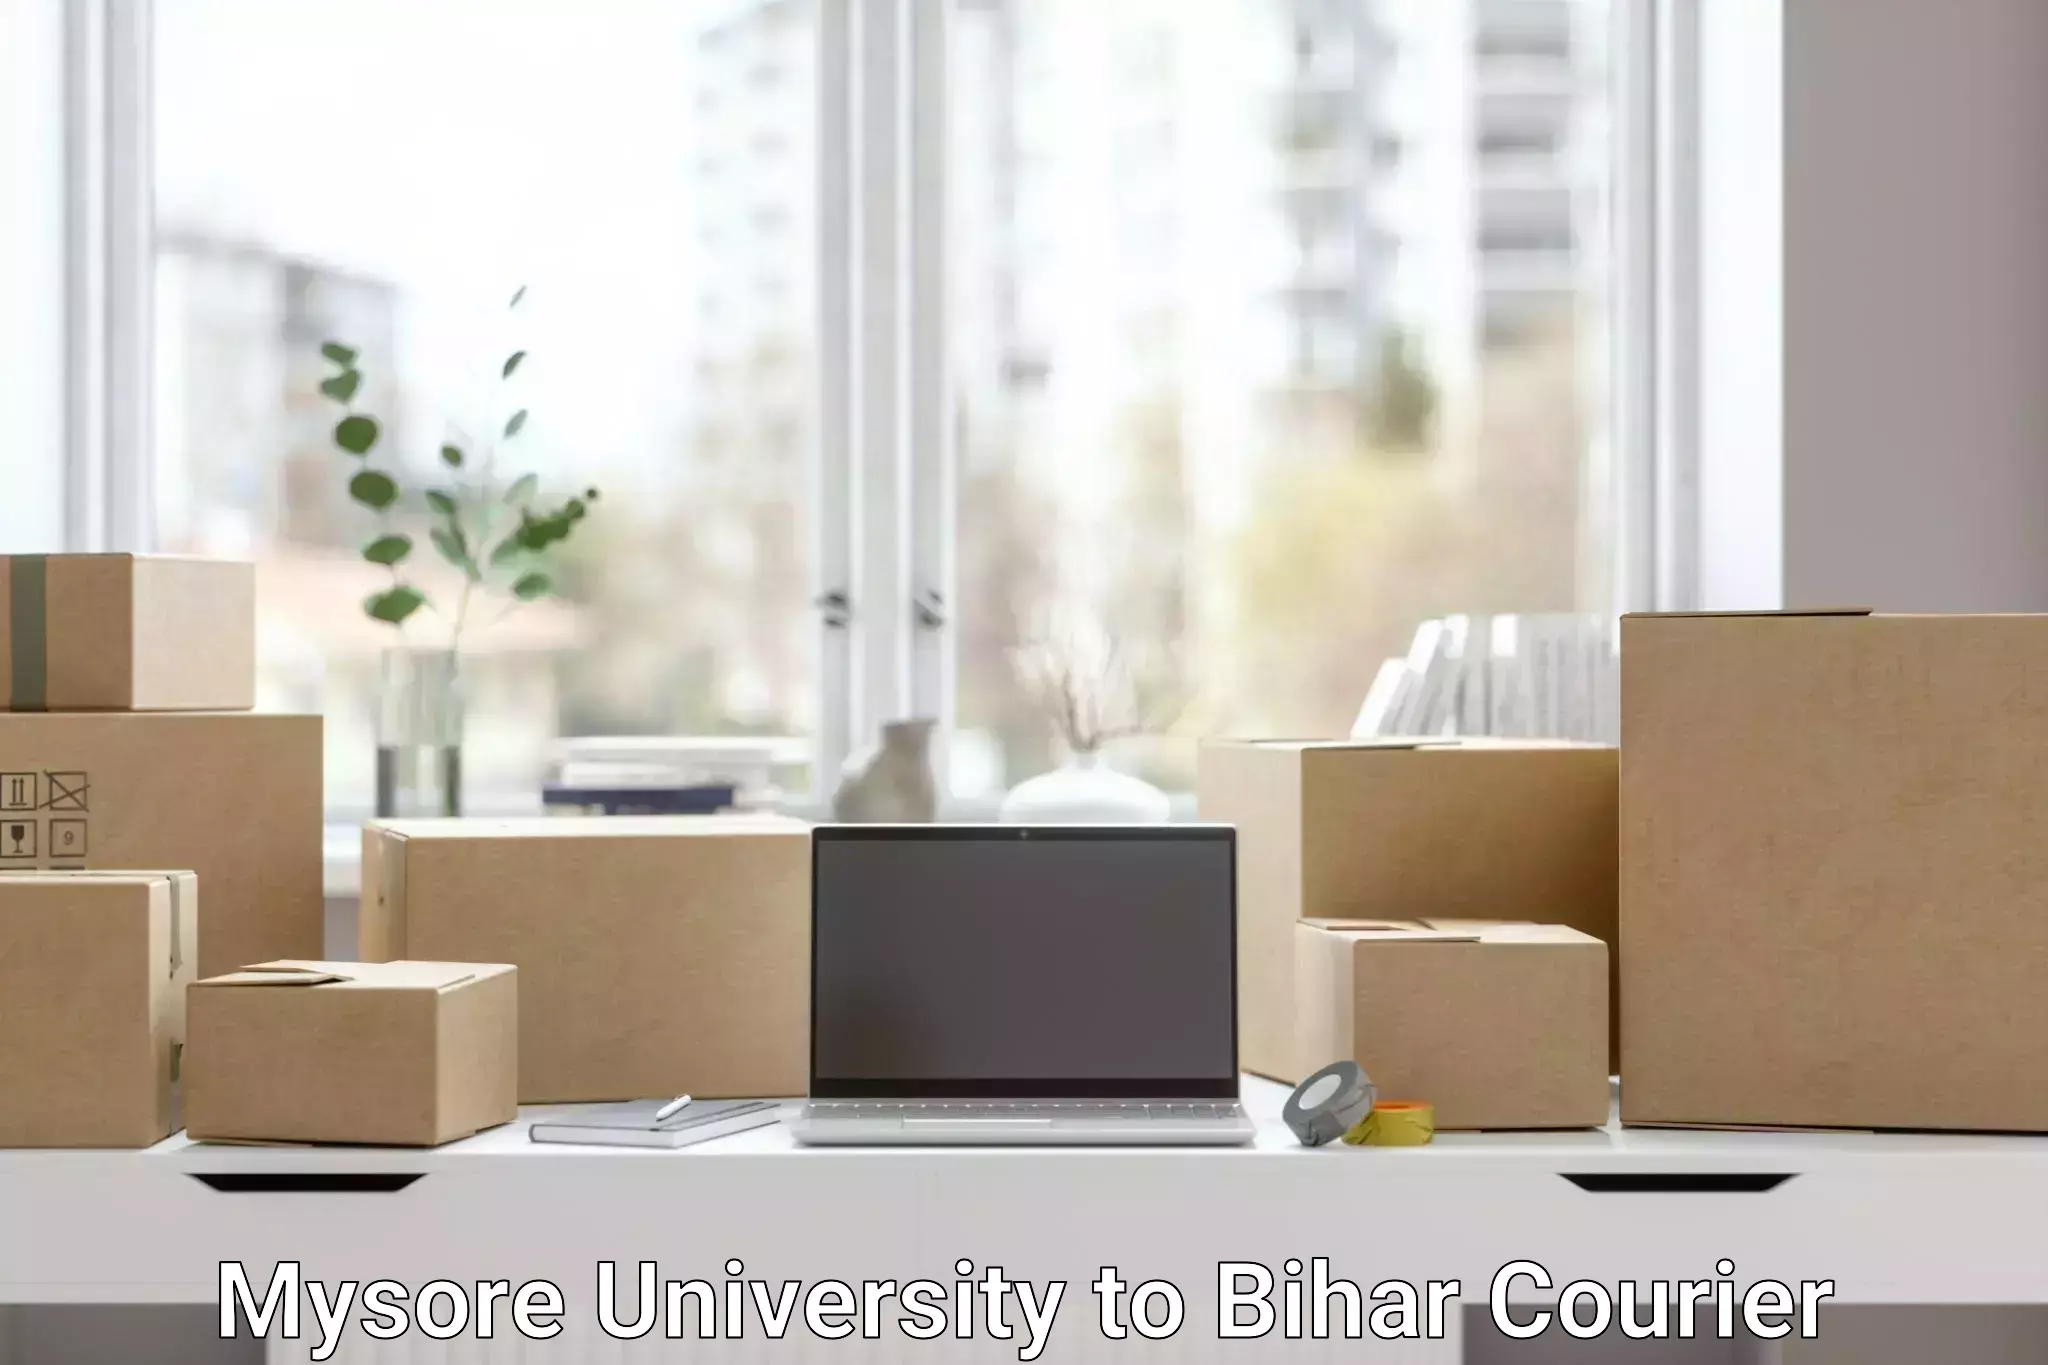 Next-generation courier services Mysore University to Marhowrah